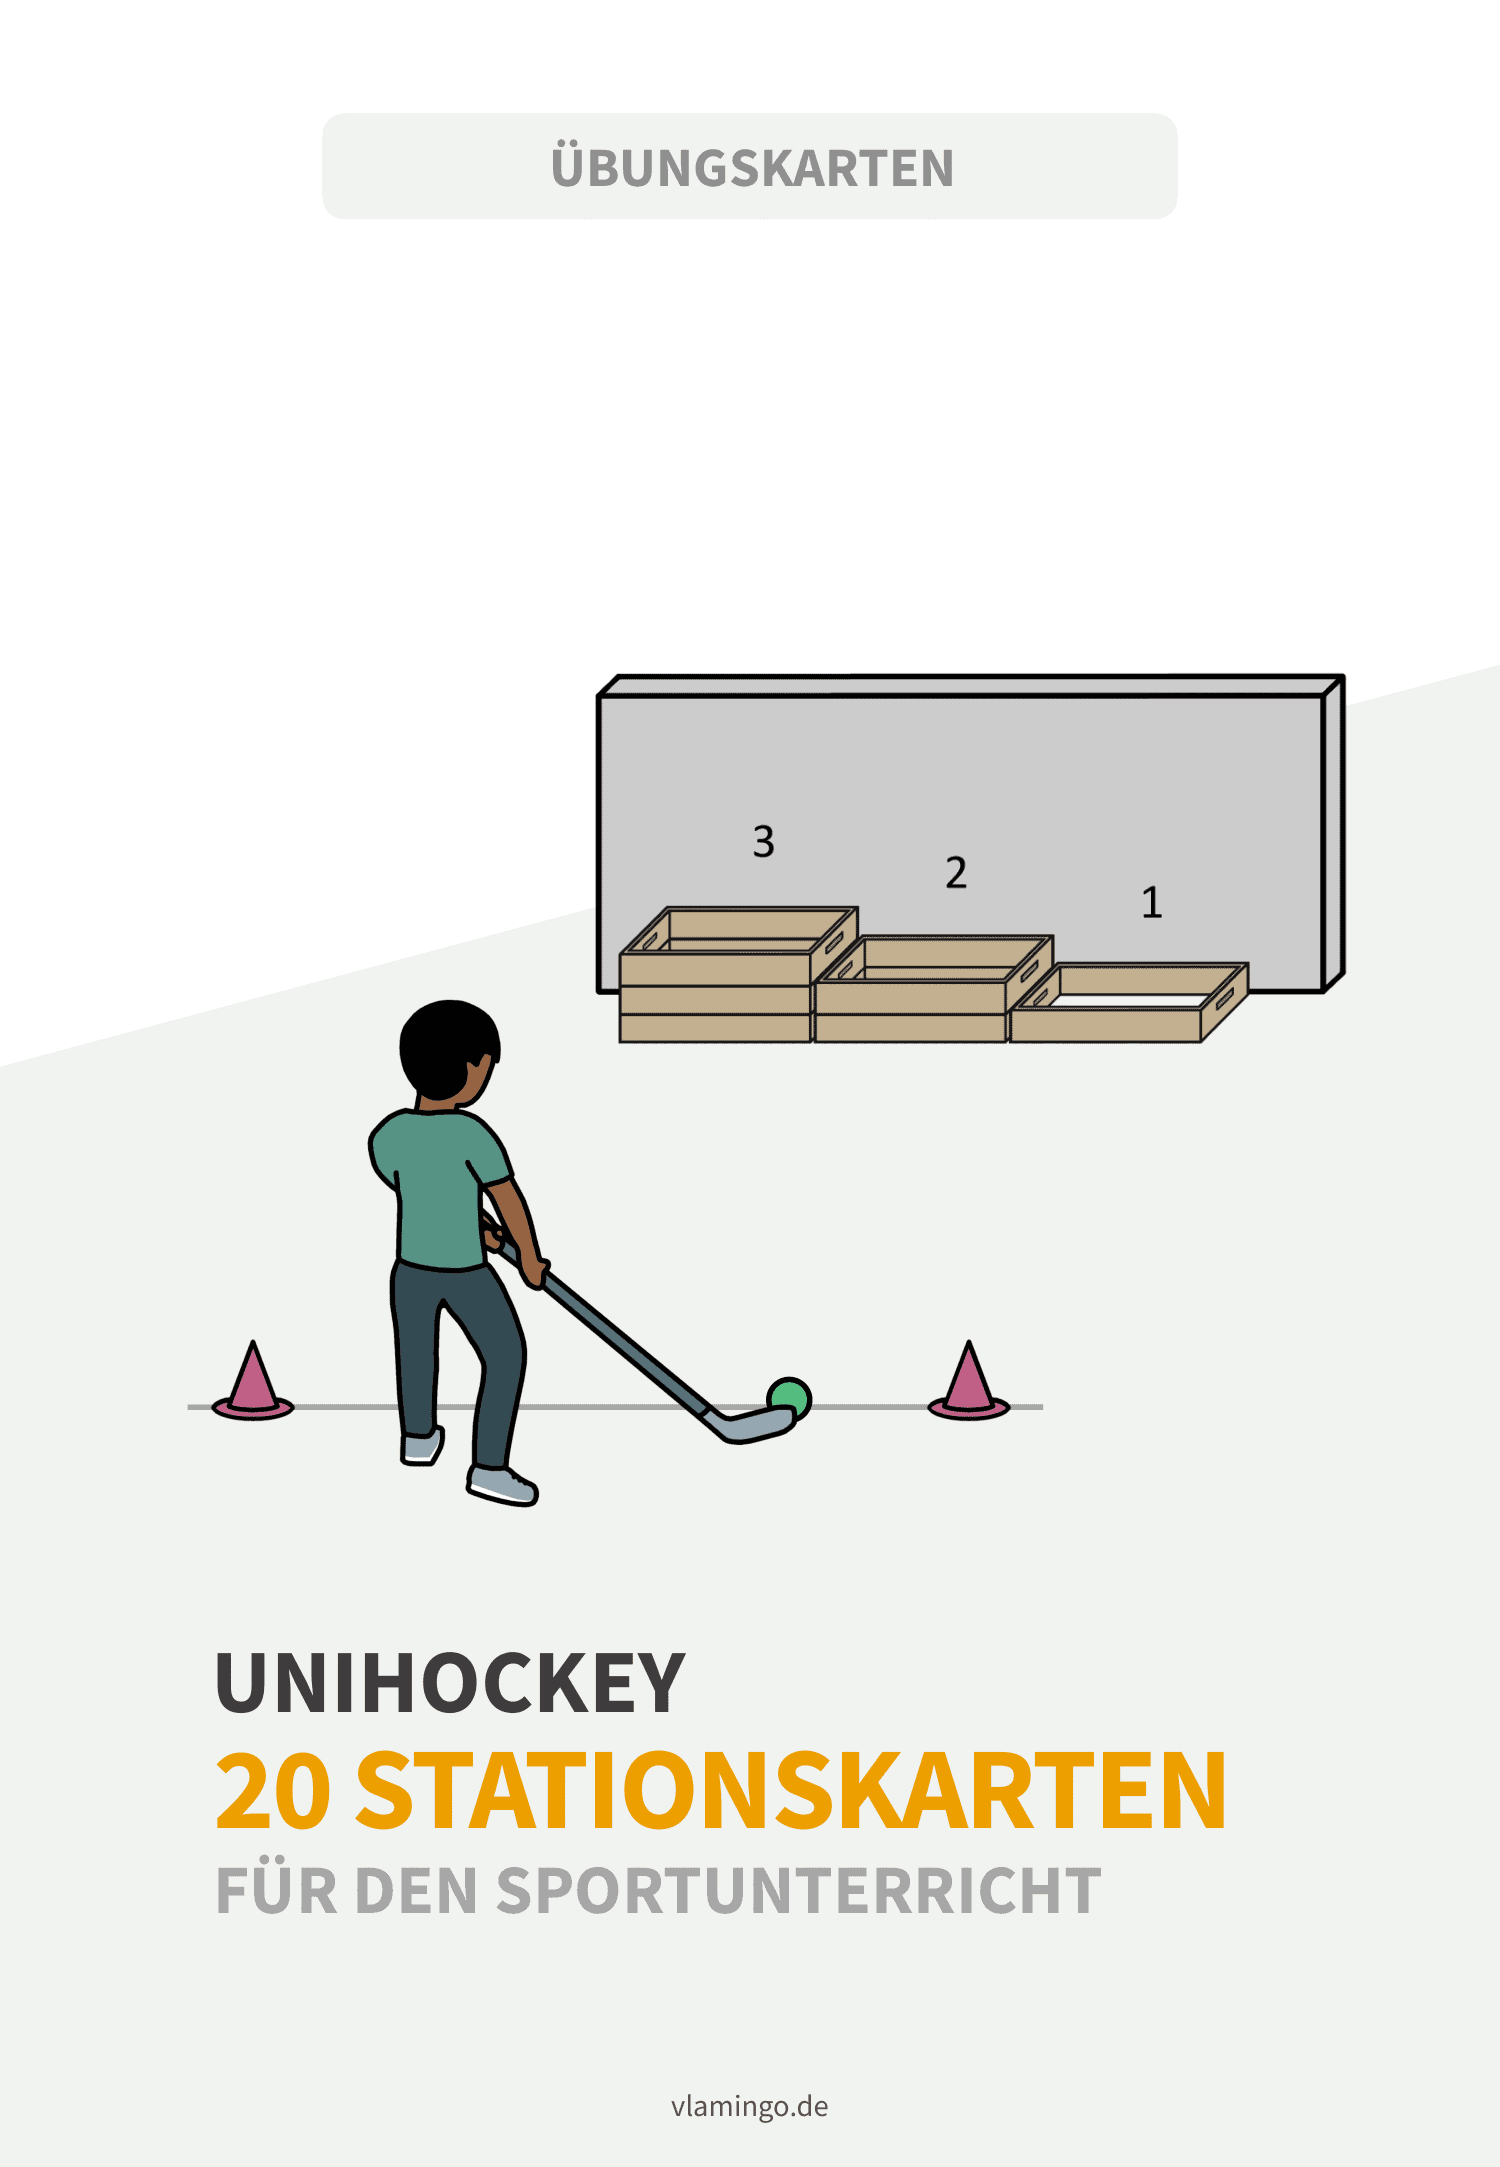 Unihockey - 20 Stationskarten für den Sportunterricht